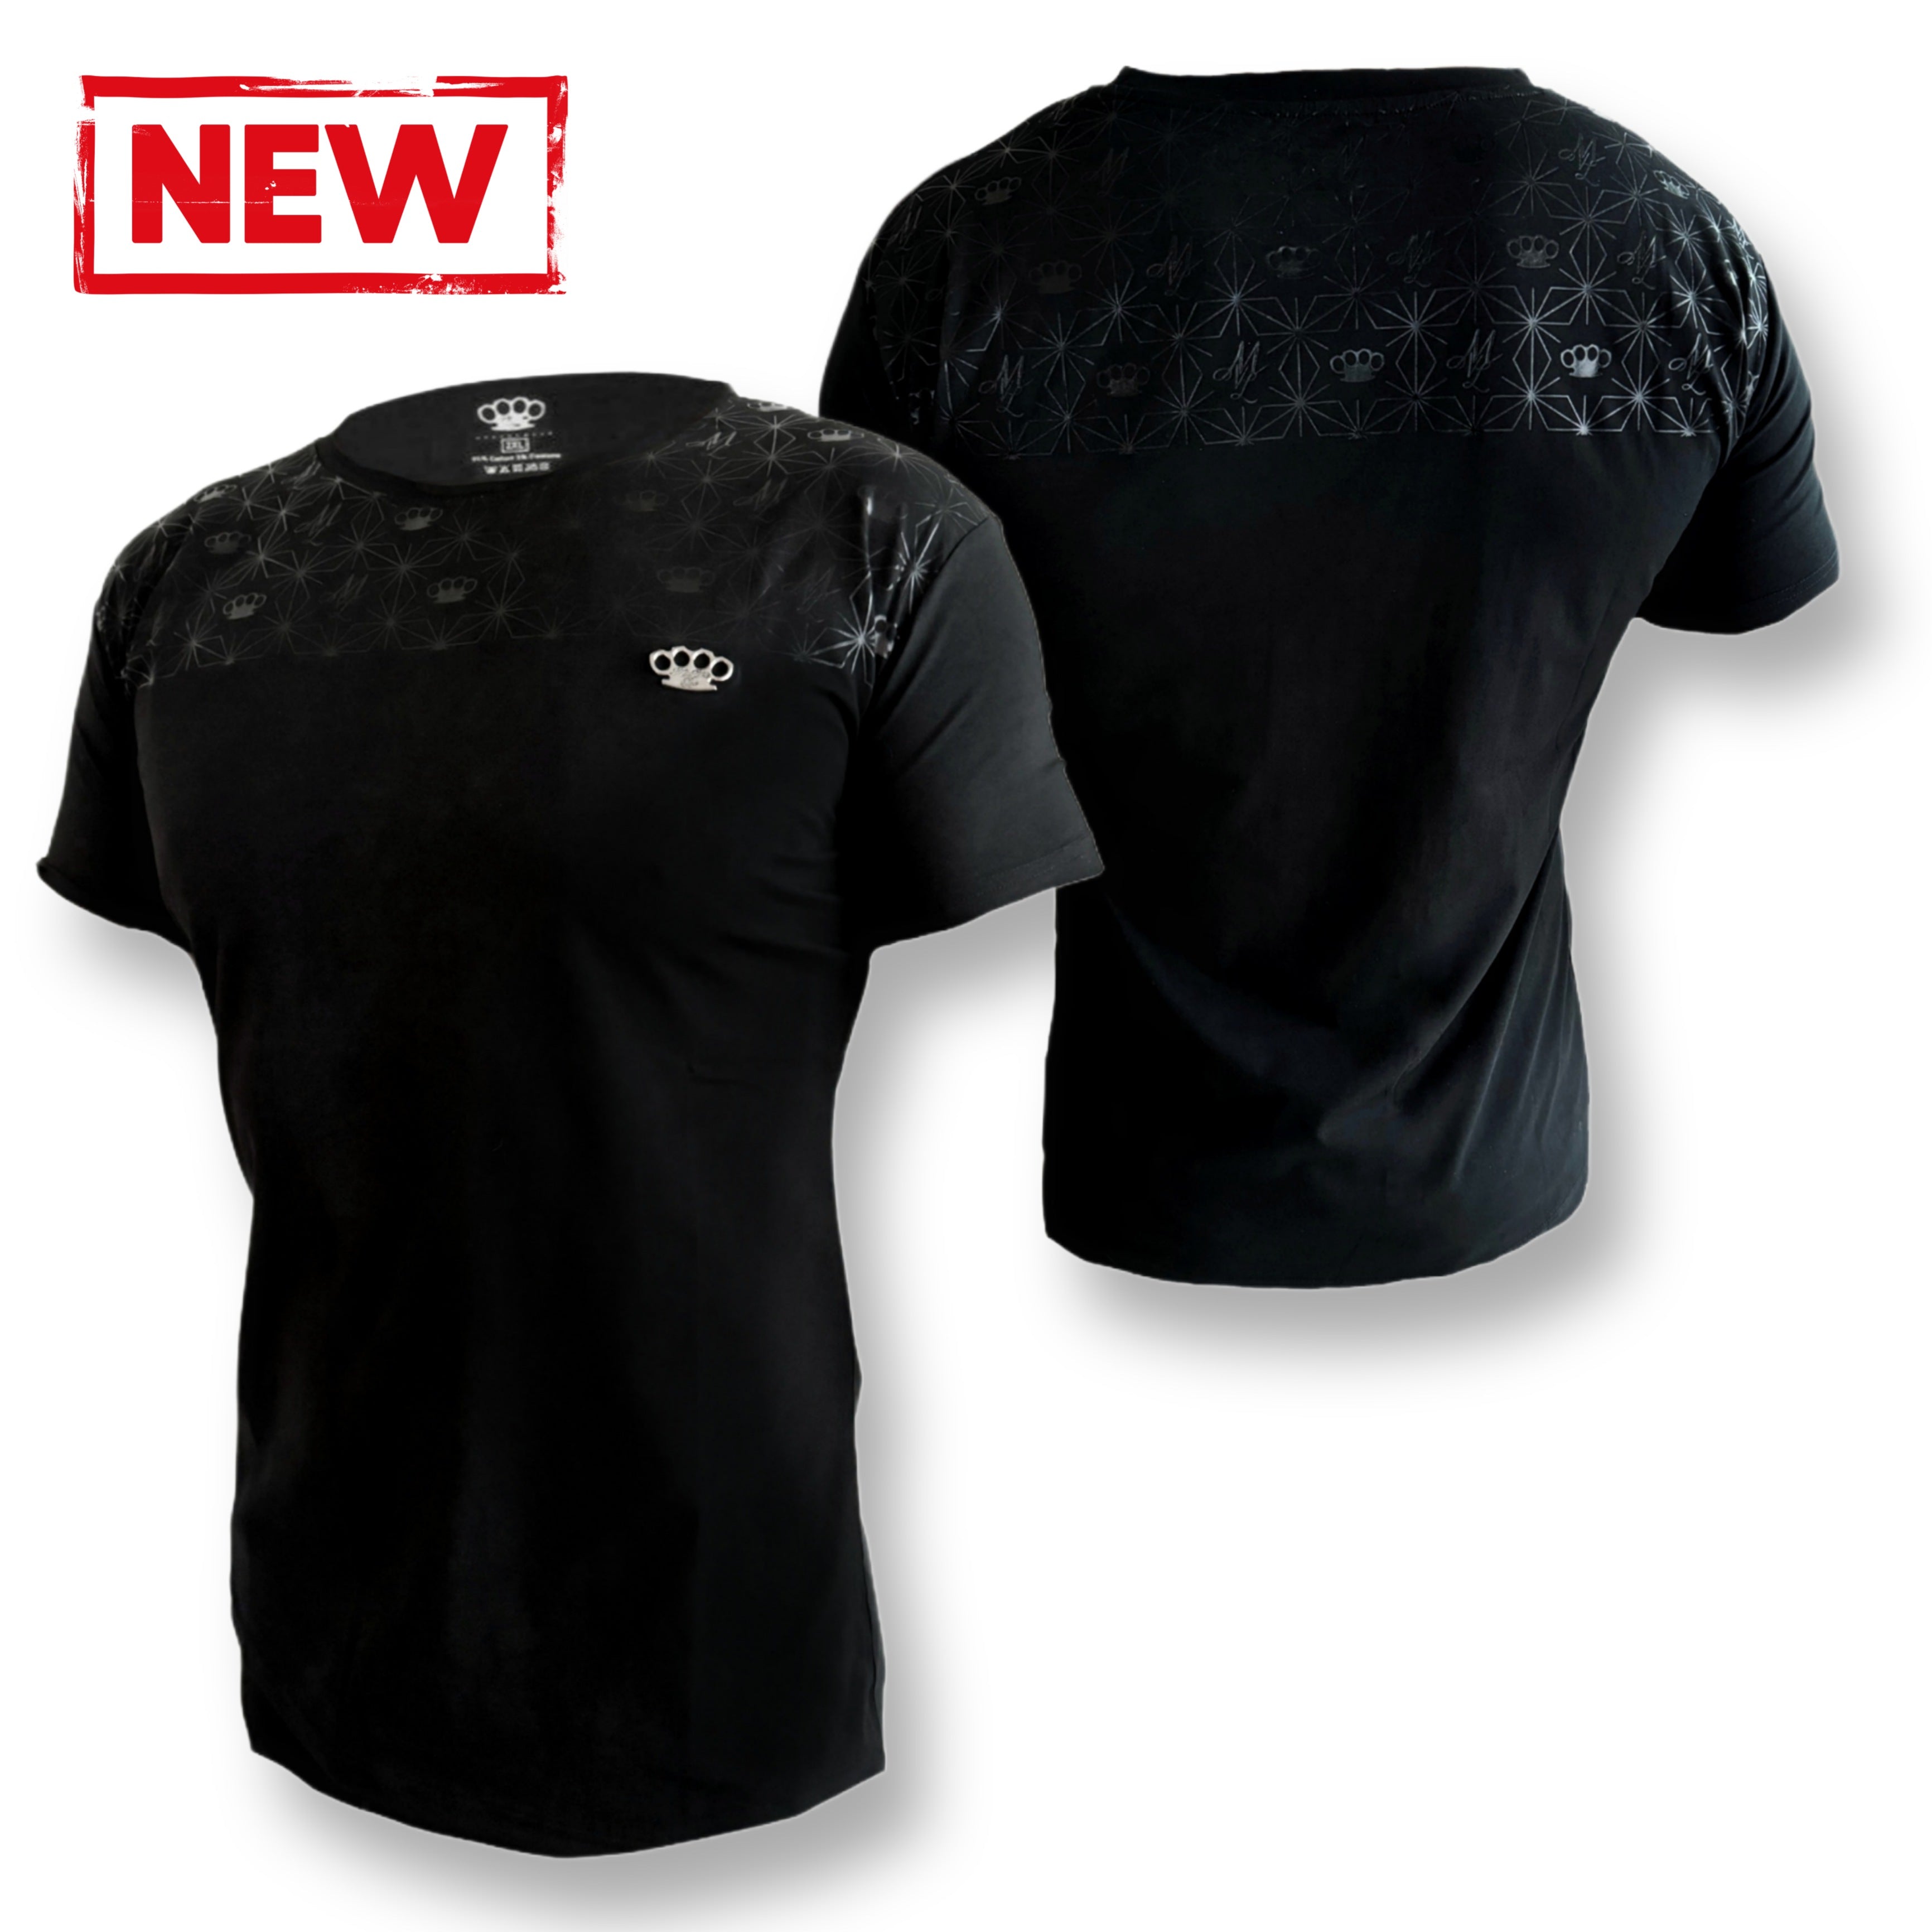 MVL Geometric T-shirt - black